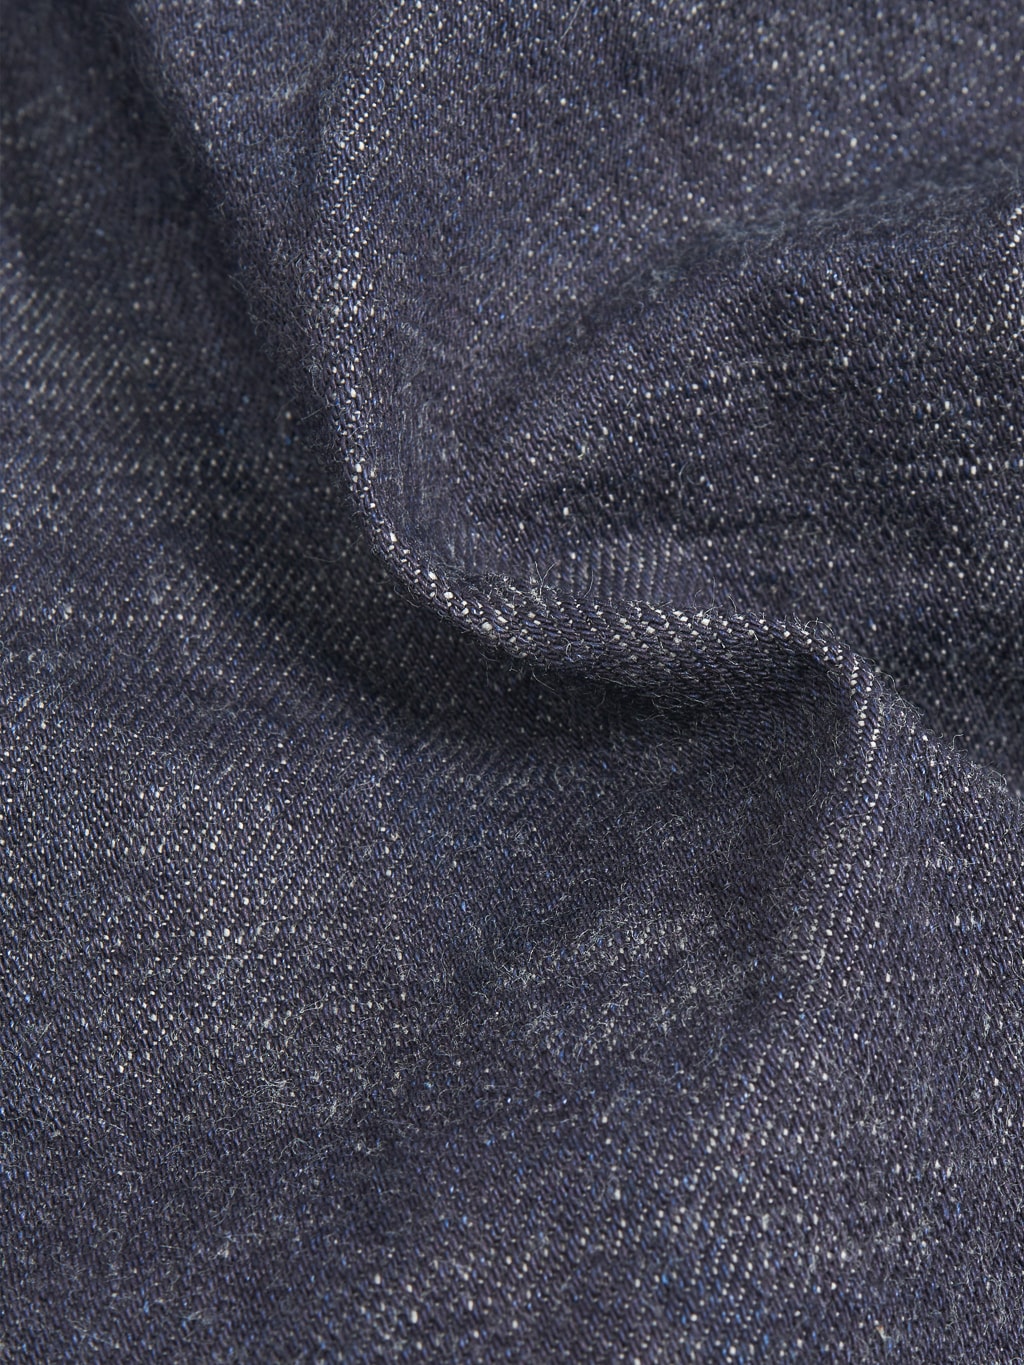 The Strike Gold 5109 15oz Slub Grey Weft Slim Tapered Jeans texture